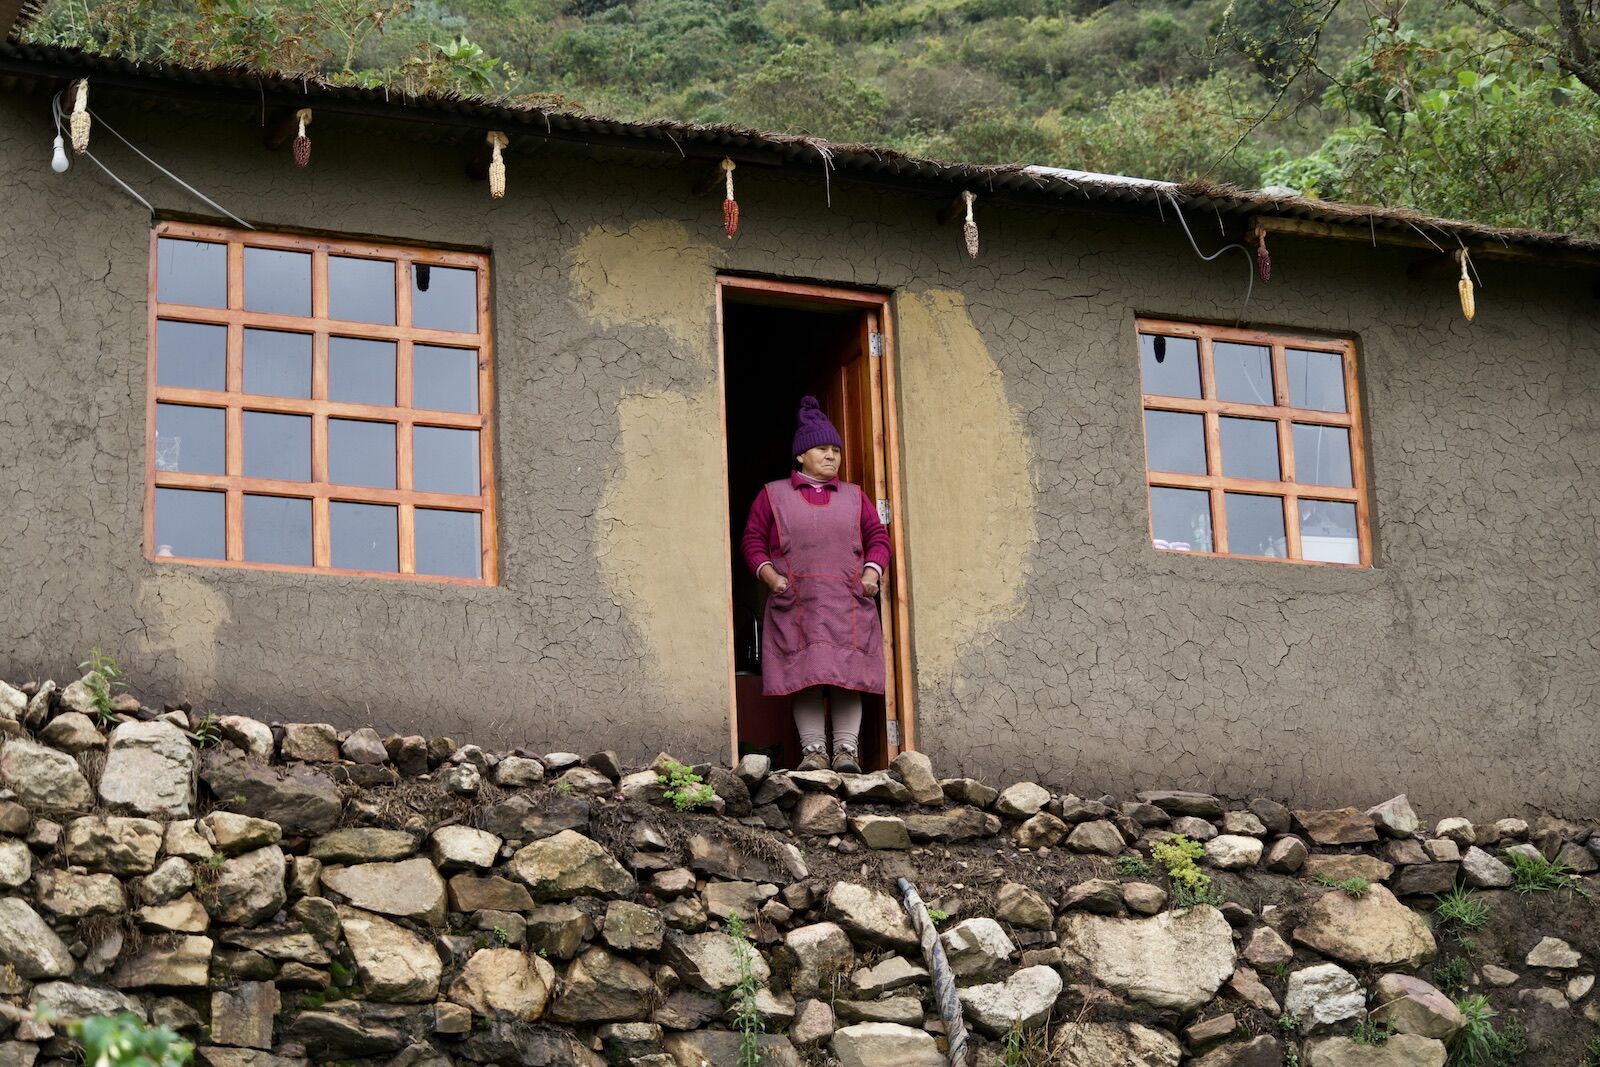 Panchita outside her home in Peru 